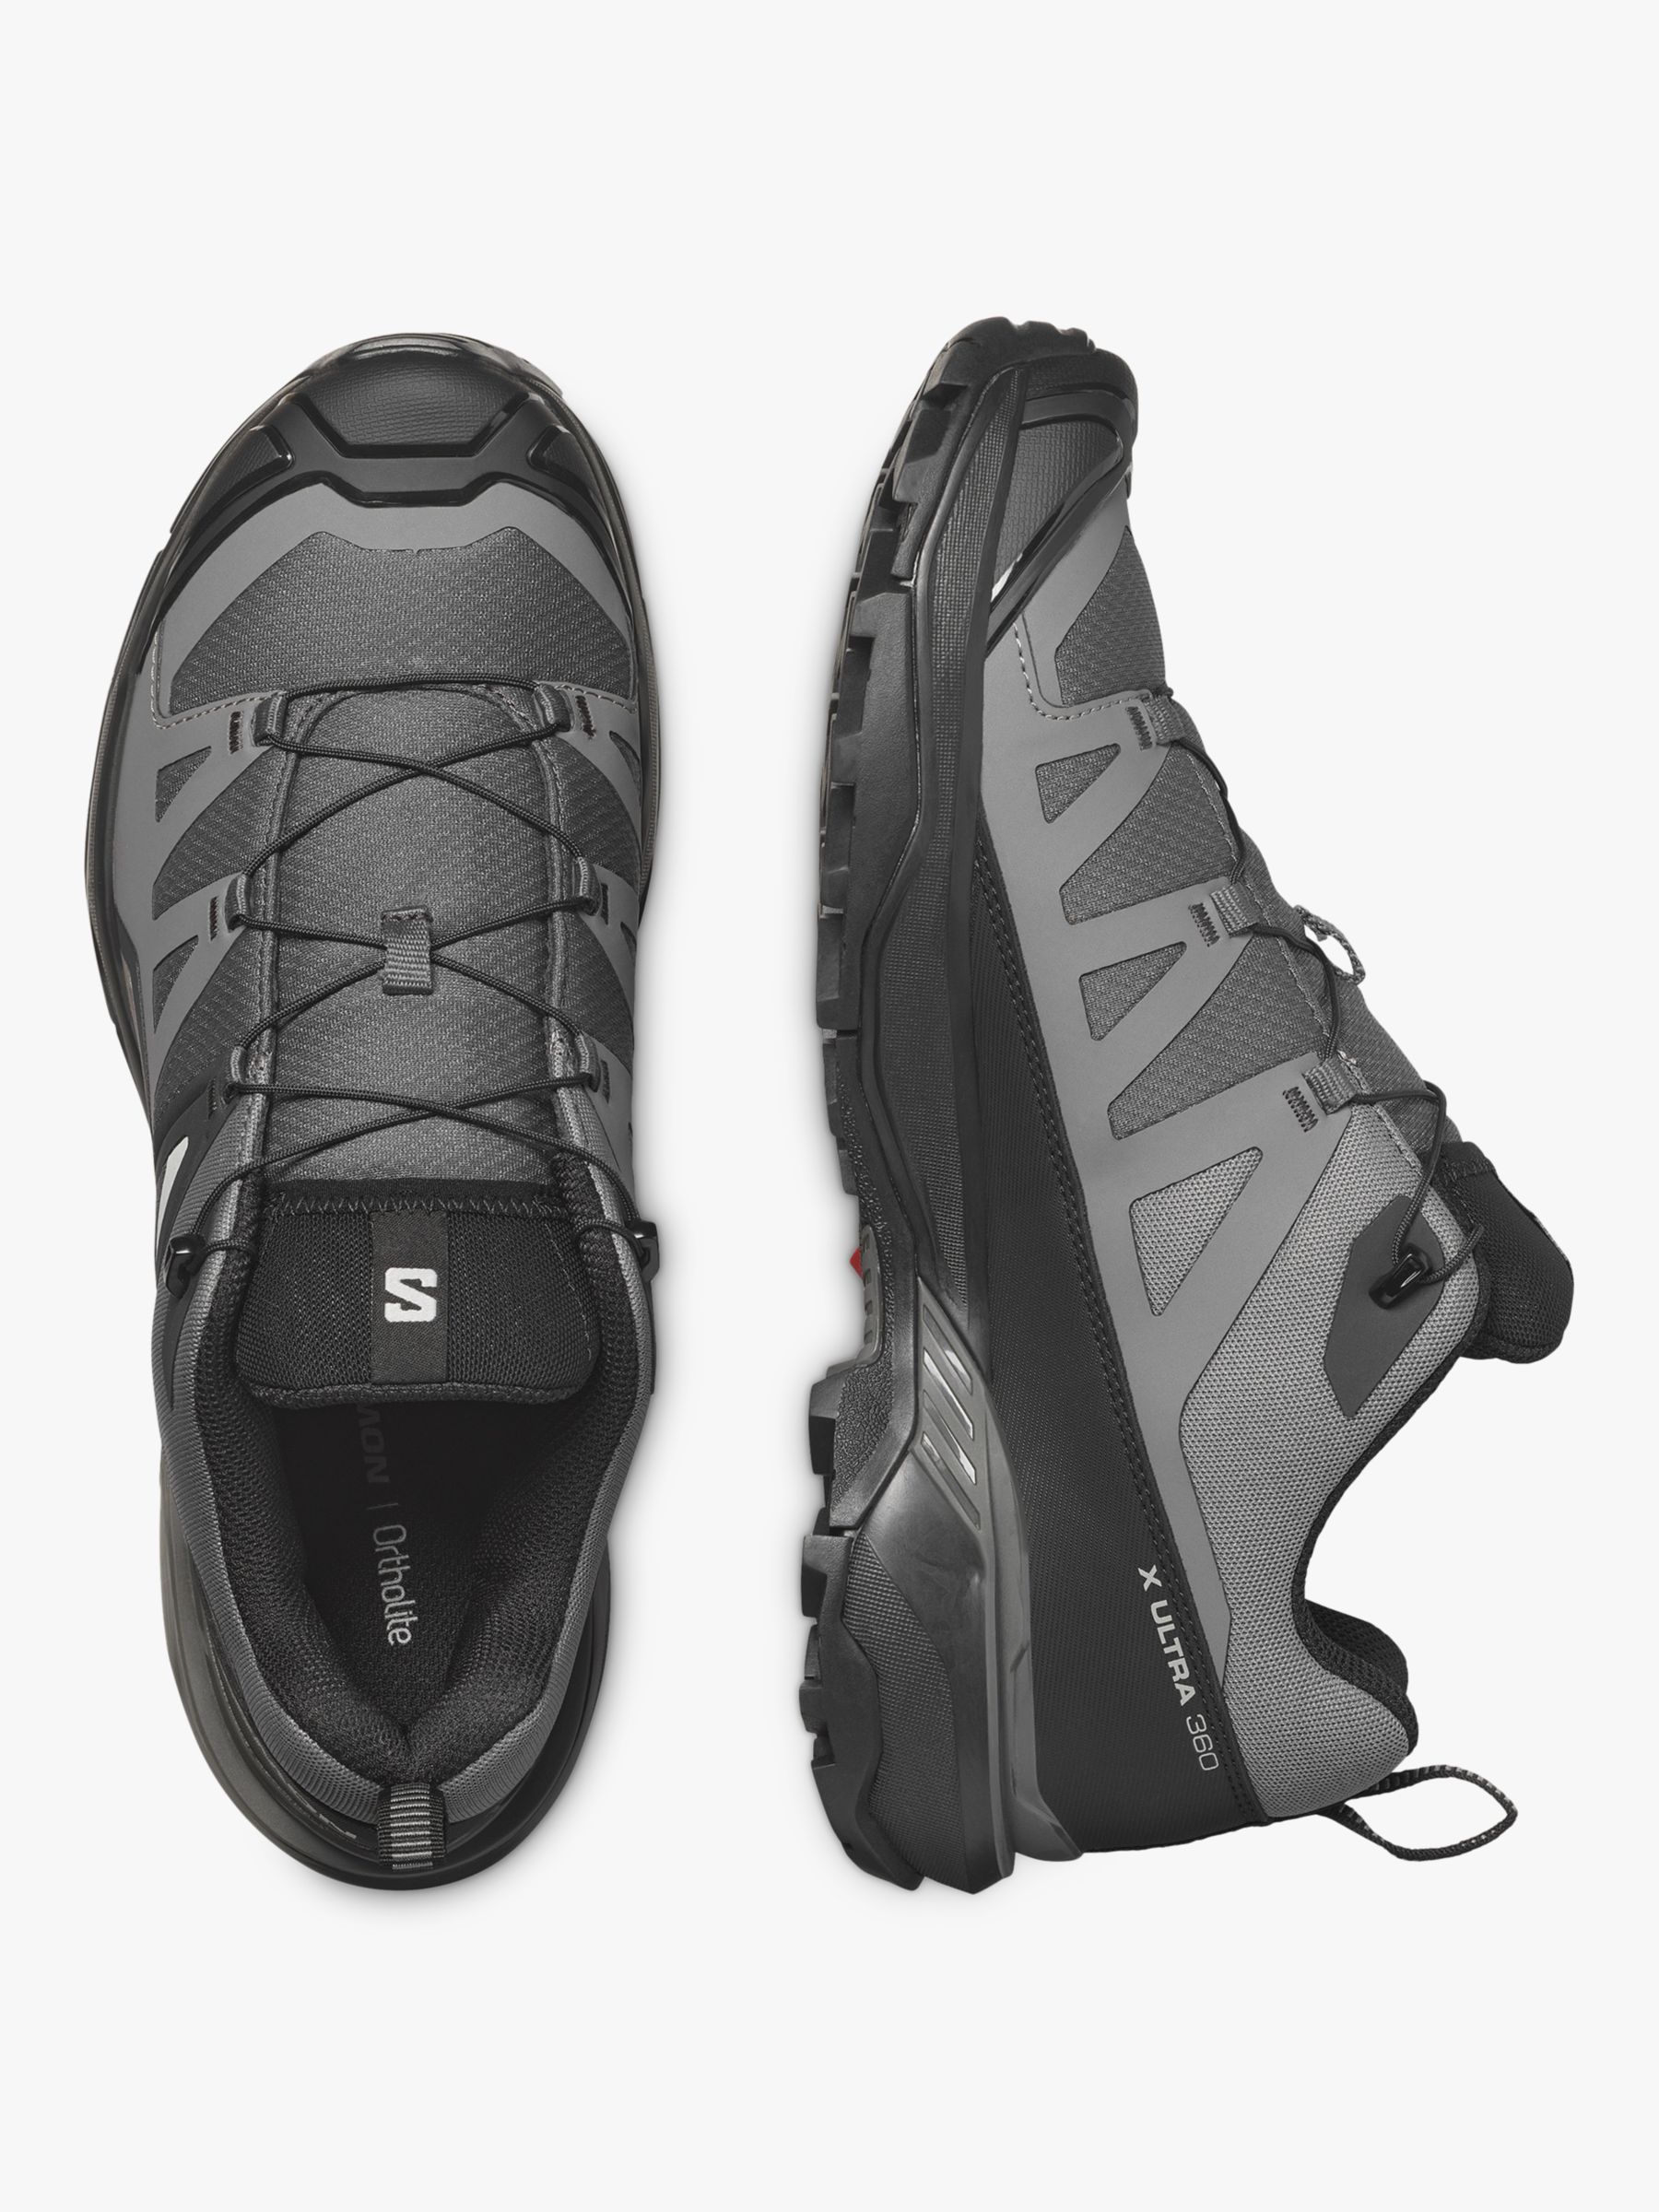 Salomon X Ultra 360 Men's Hiking Shoes, Magnet/Black, 9